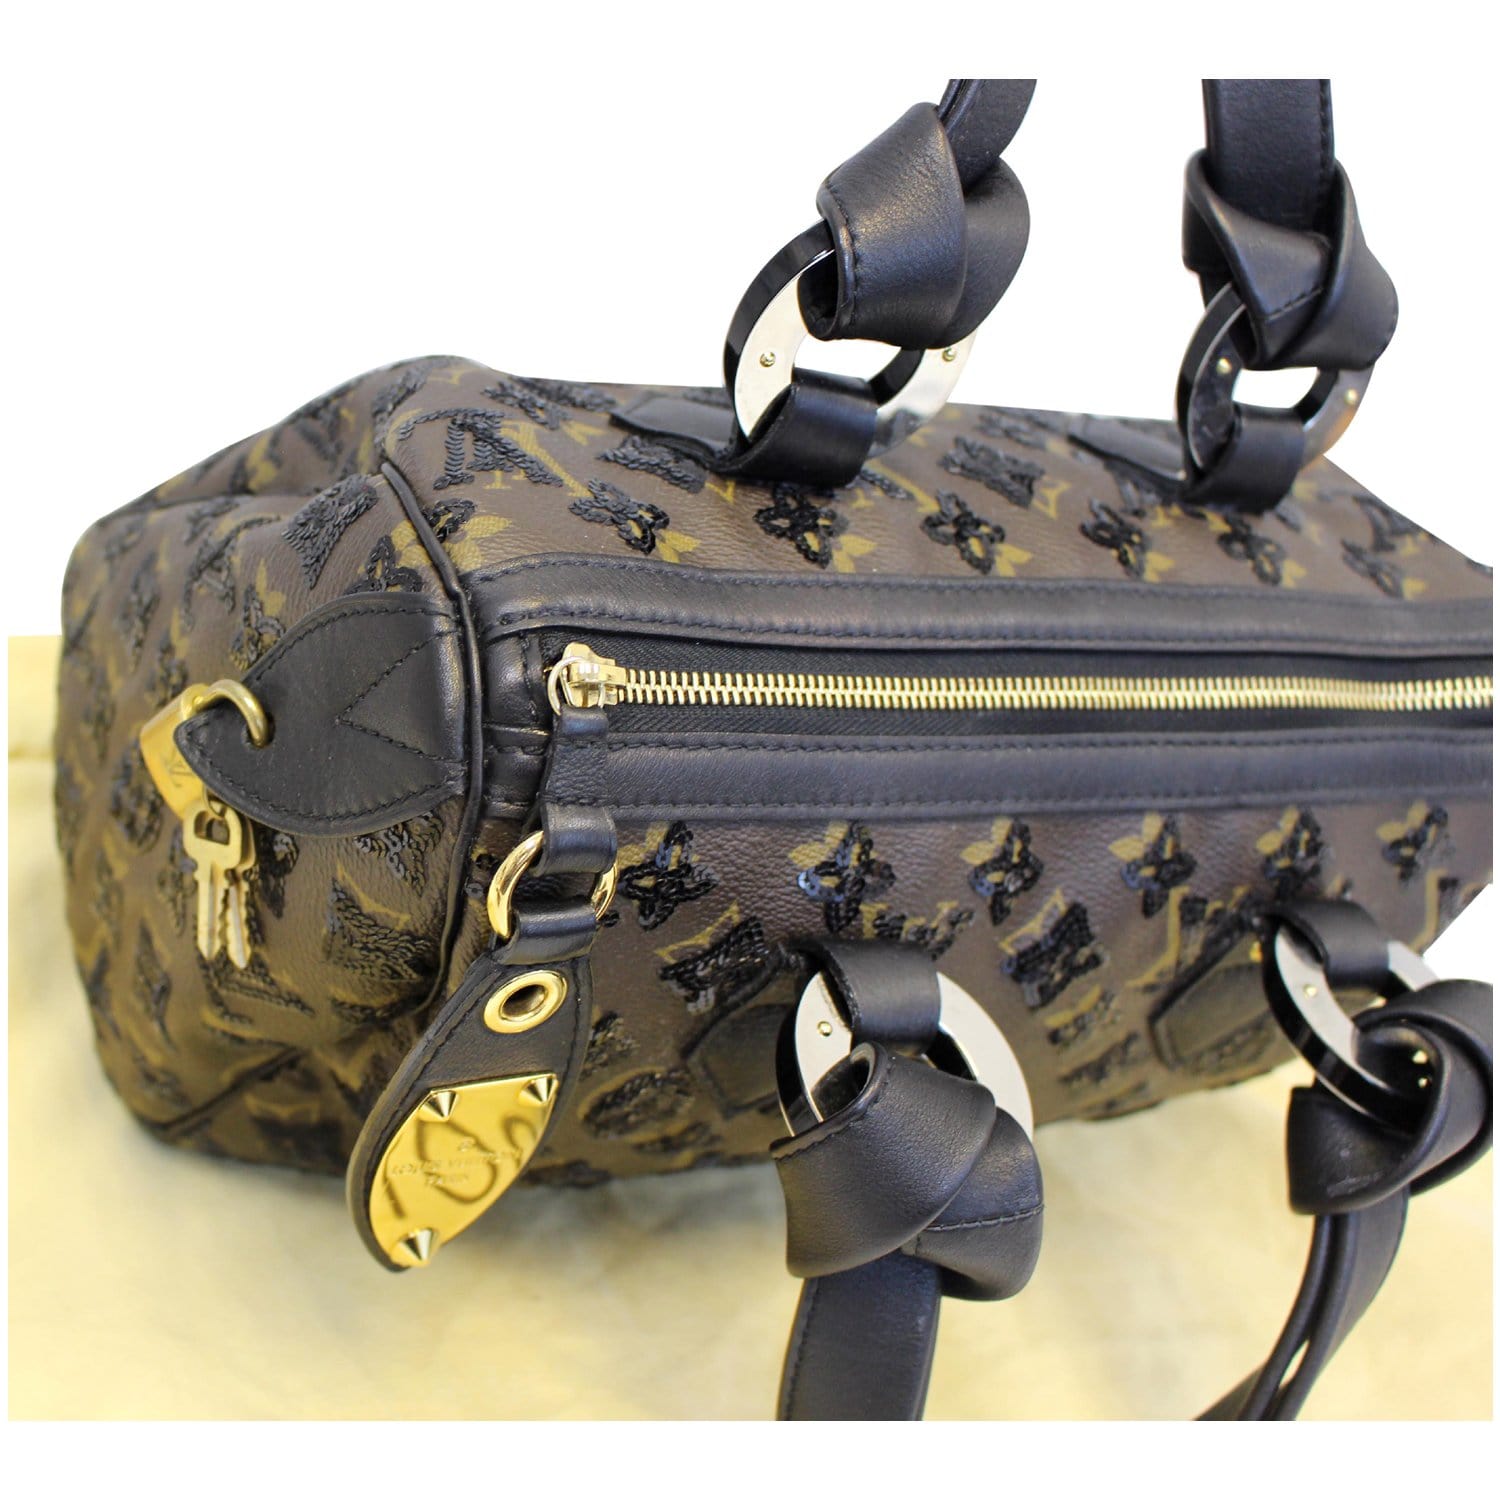 LOUIS VUITTON, a leather and woolmix monogrammed sequin embellished handbag,  Sunshine express speedy 30. - Bukowskis